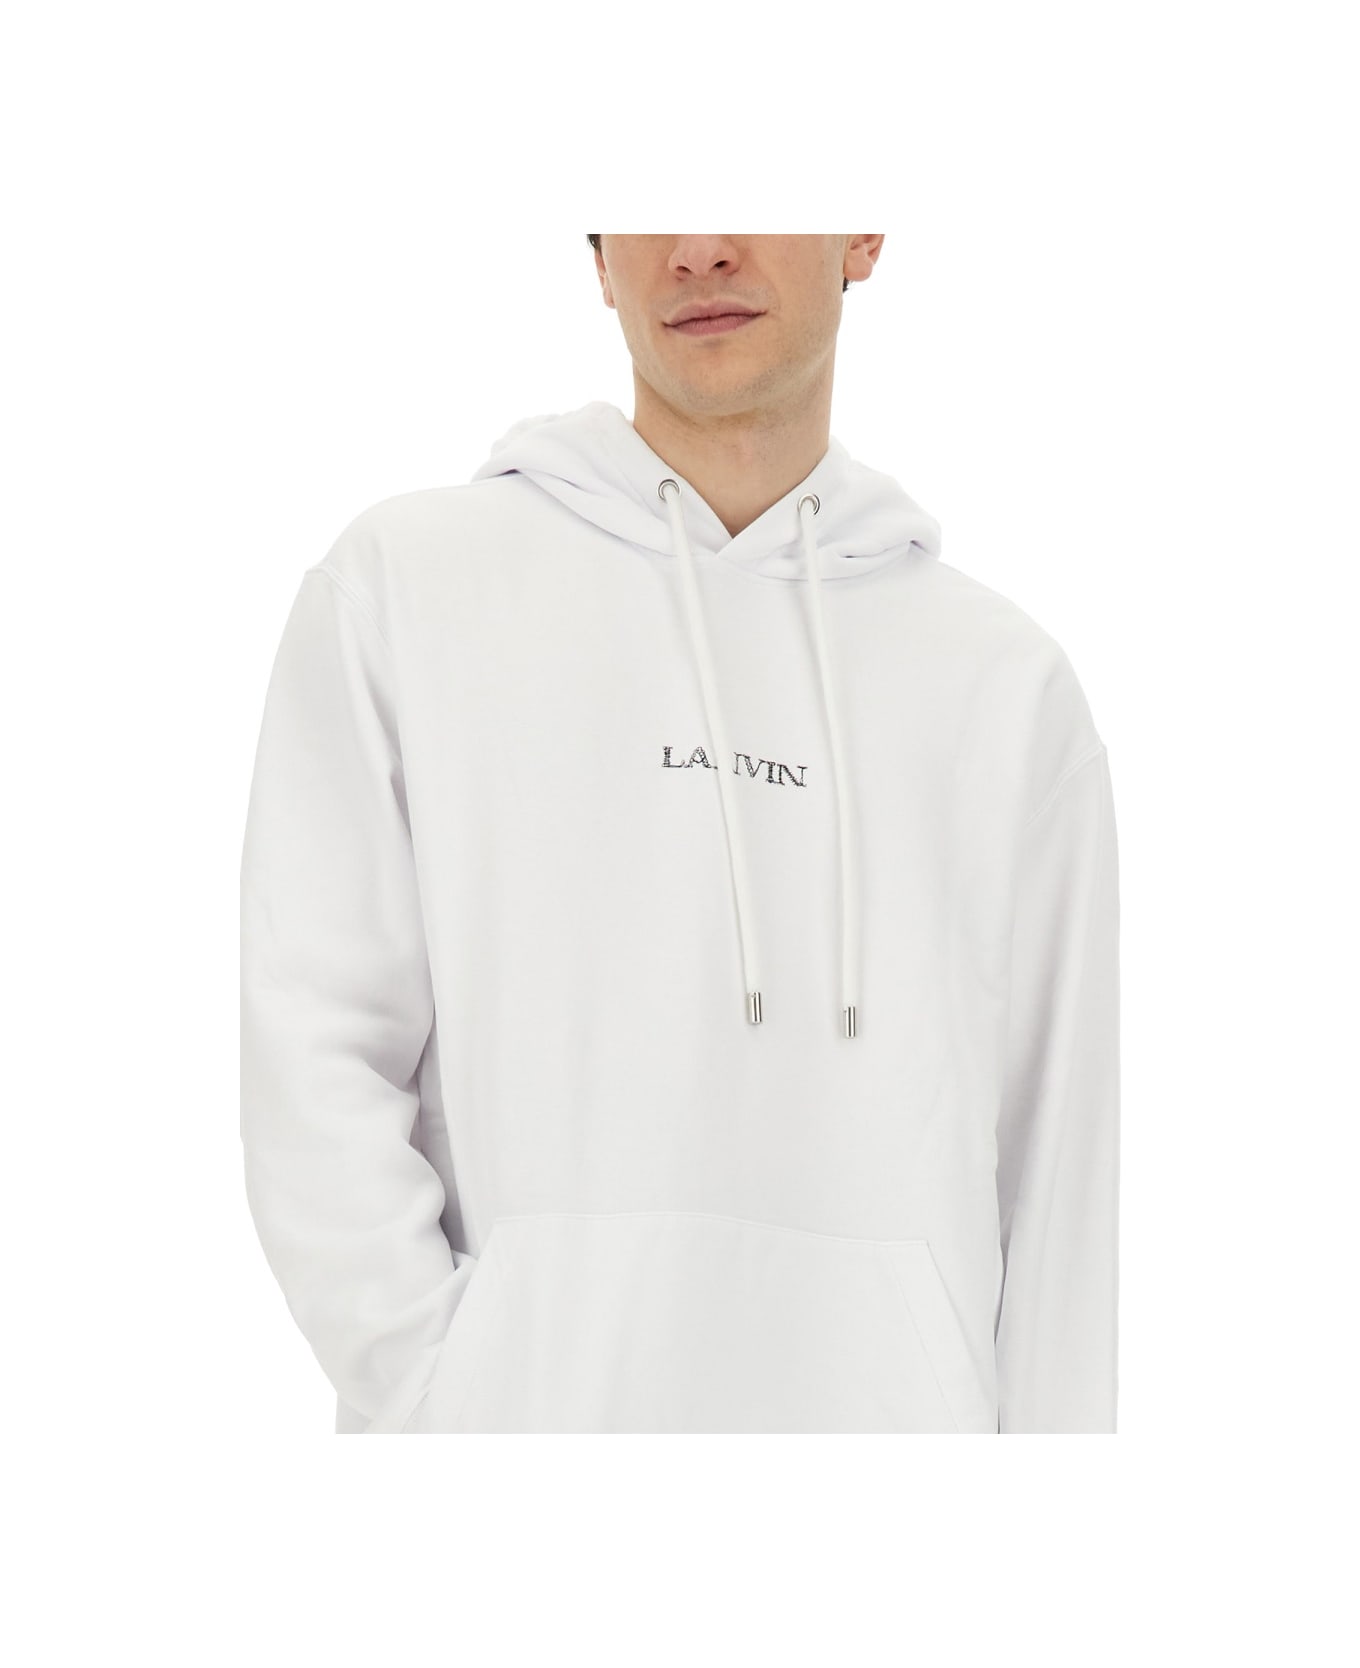 Lanvin Sweatshirt With Logo - WHITE